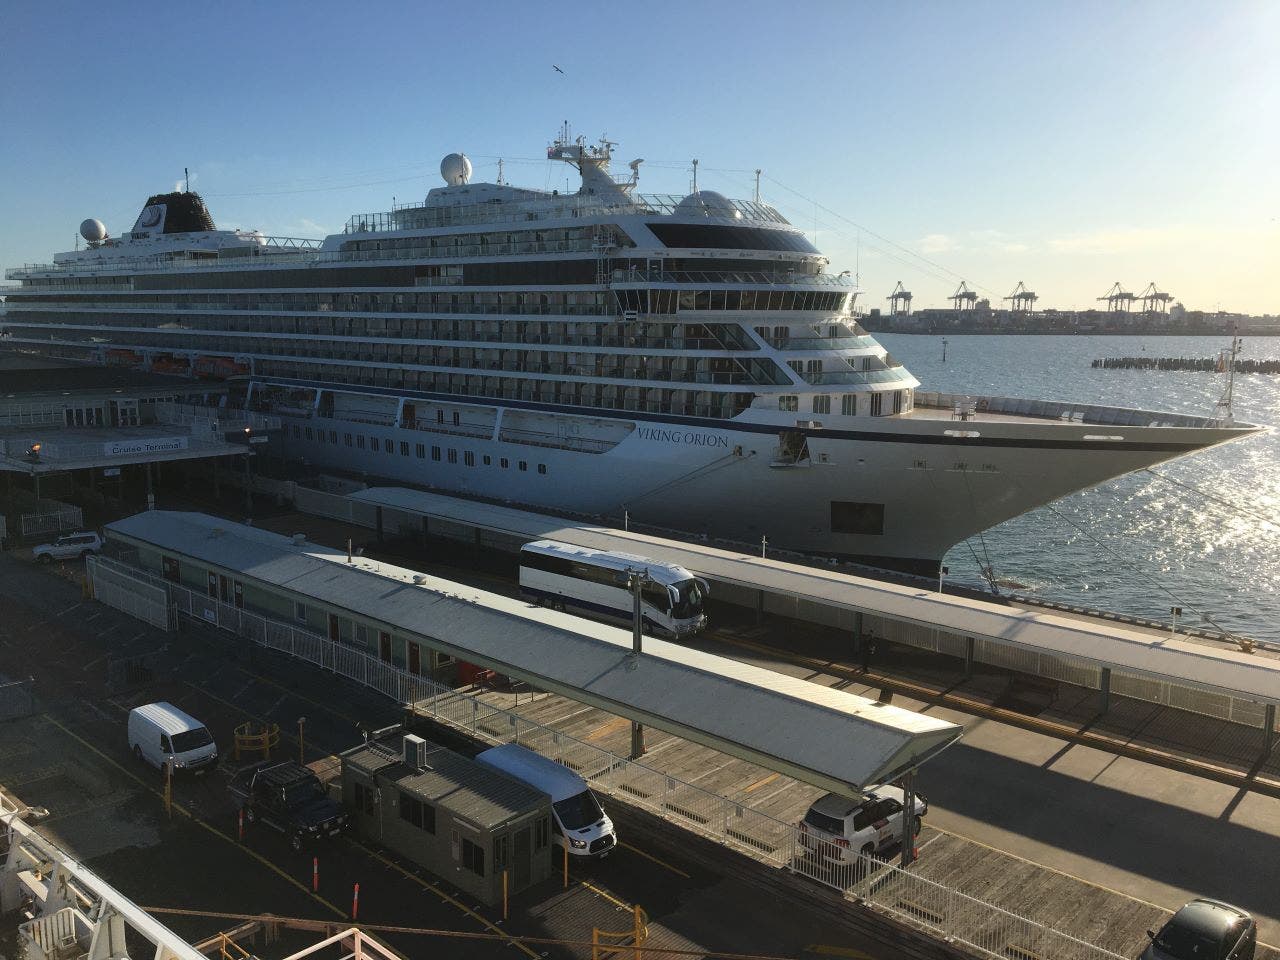 Viking cruise ship stranded off Australian coast due to fungus outbreak